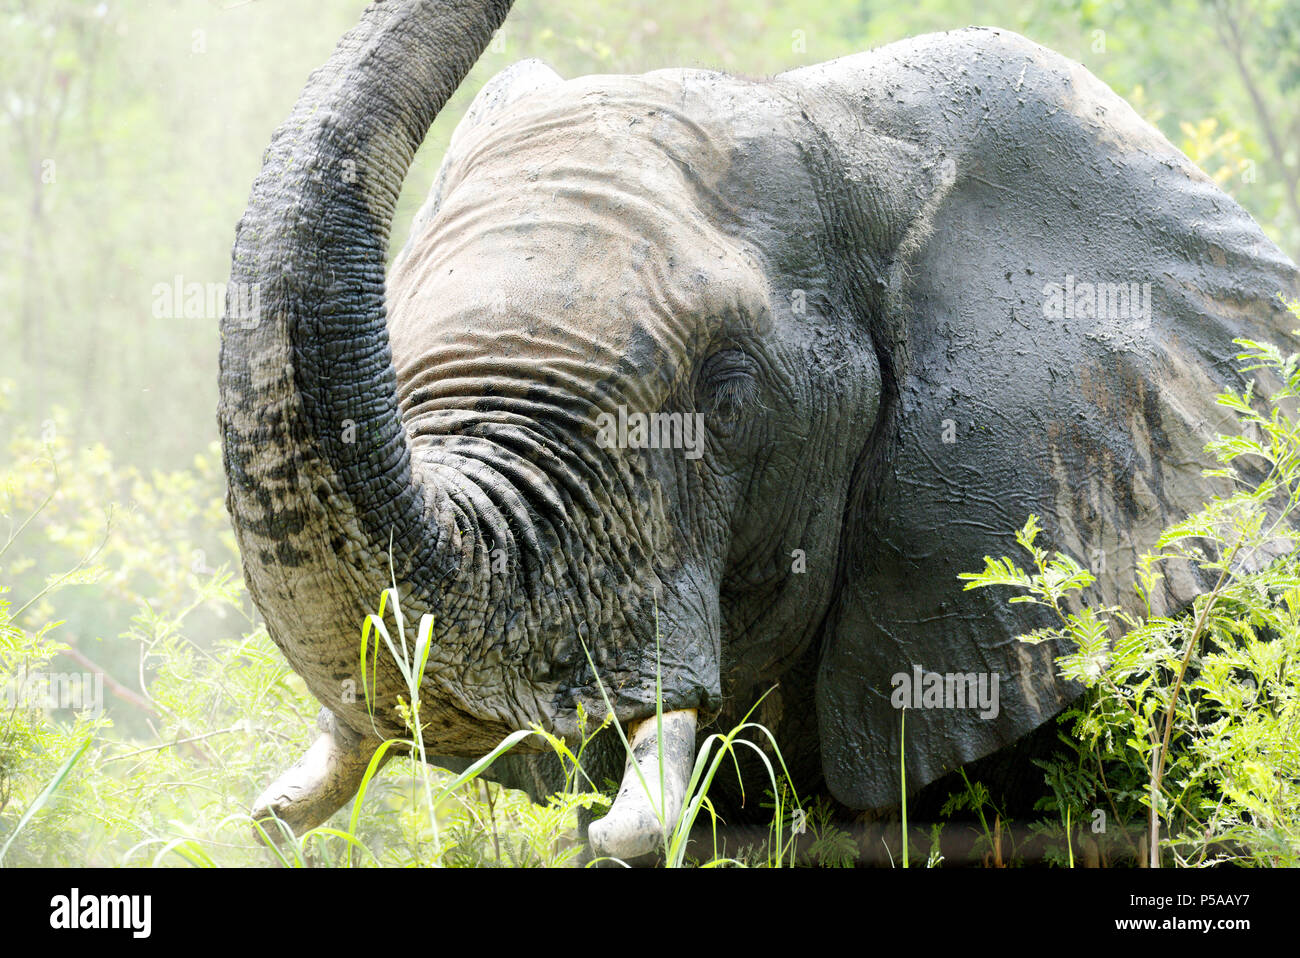 An African elephant raising its trunk Stock Photo